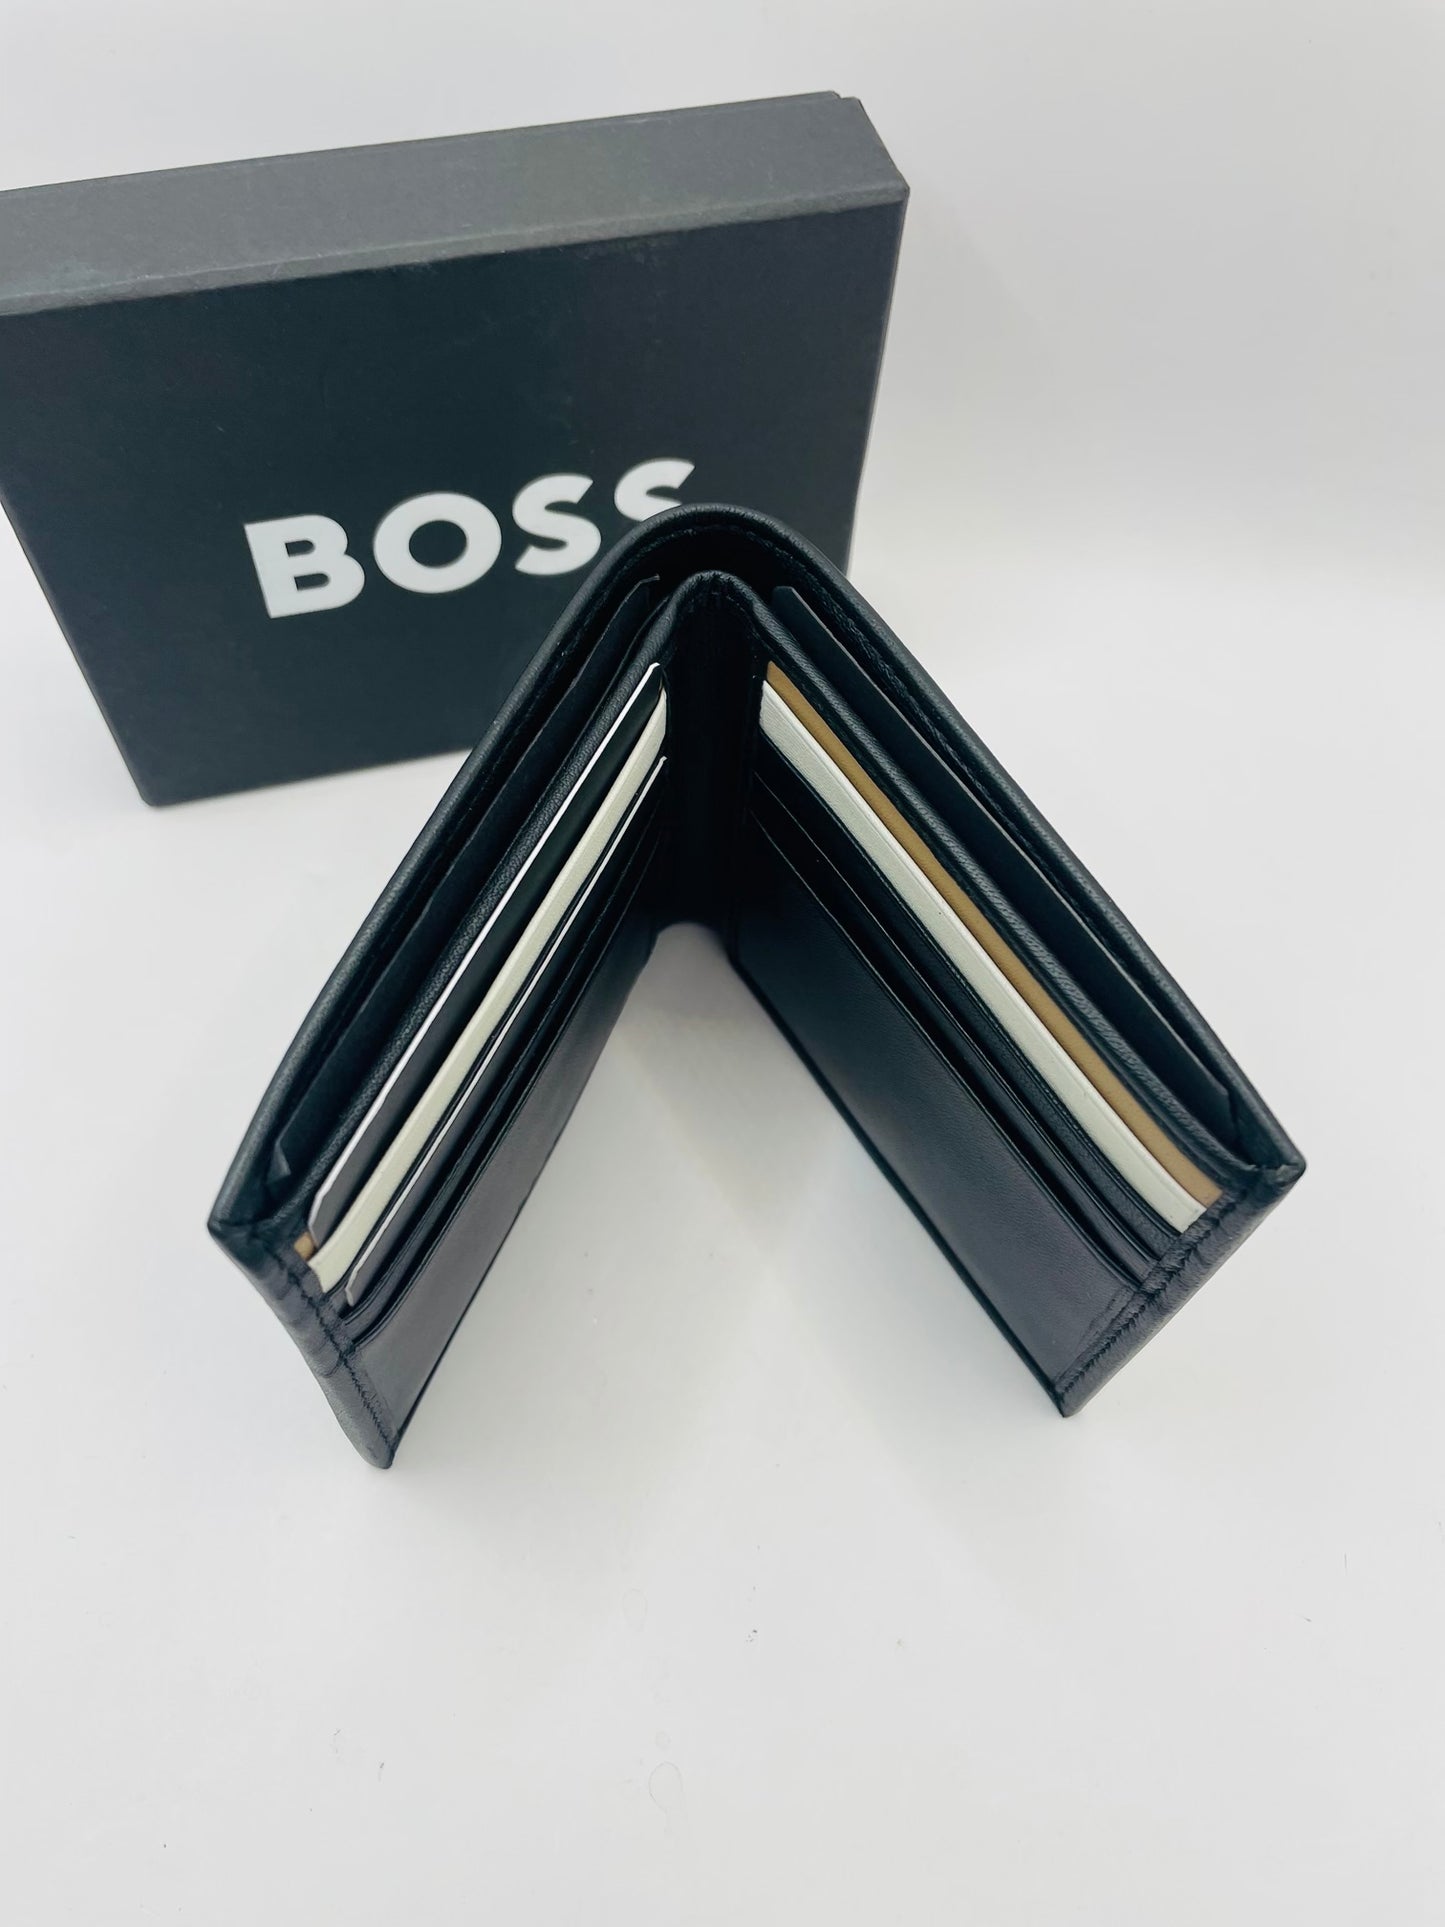 Boss men’s wallet